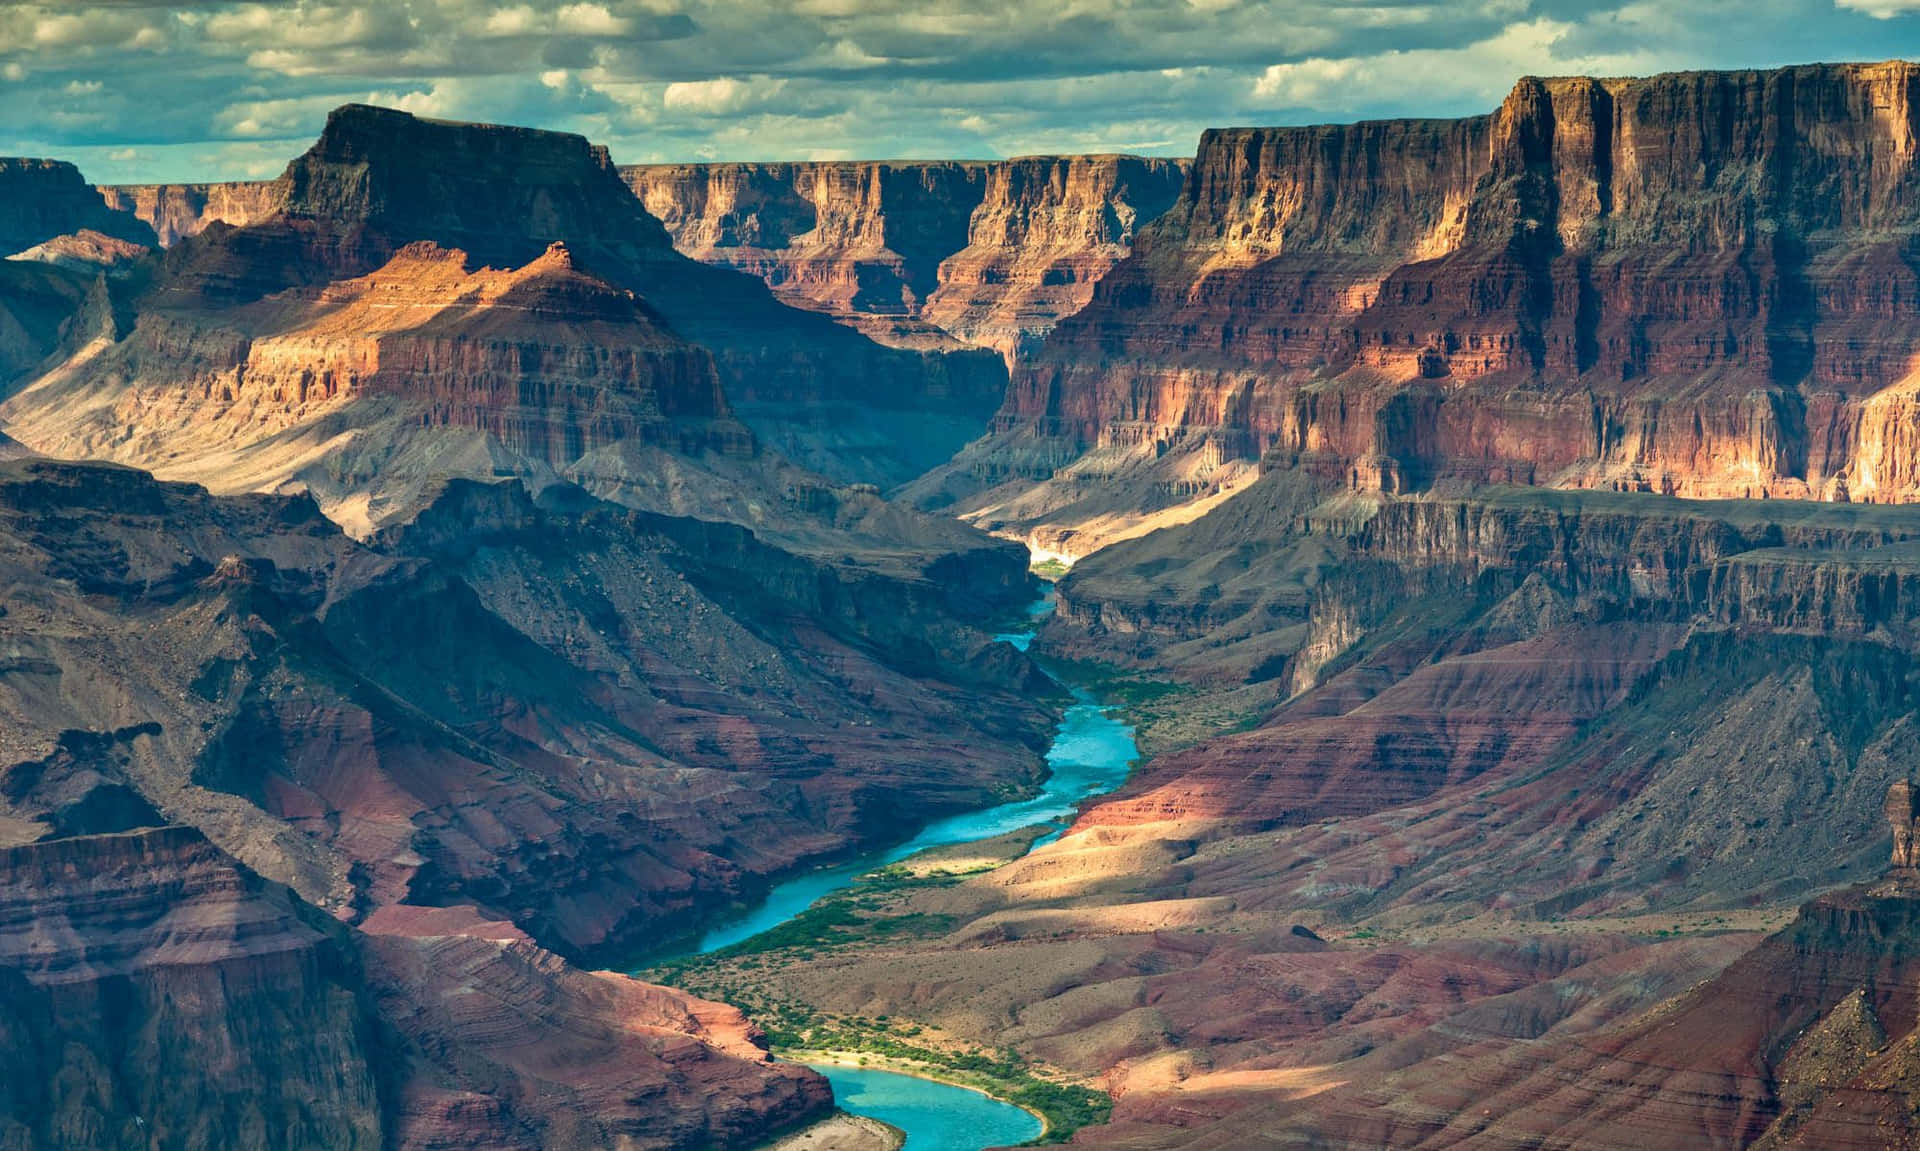 "Welcome to Arizona - the Grand Canyon State"